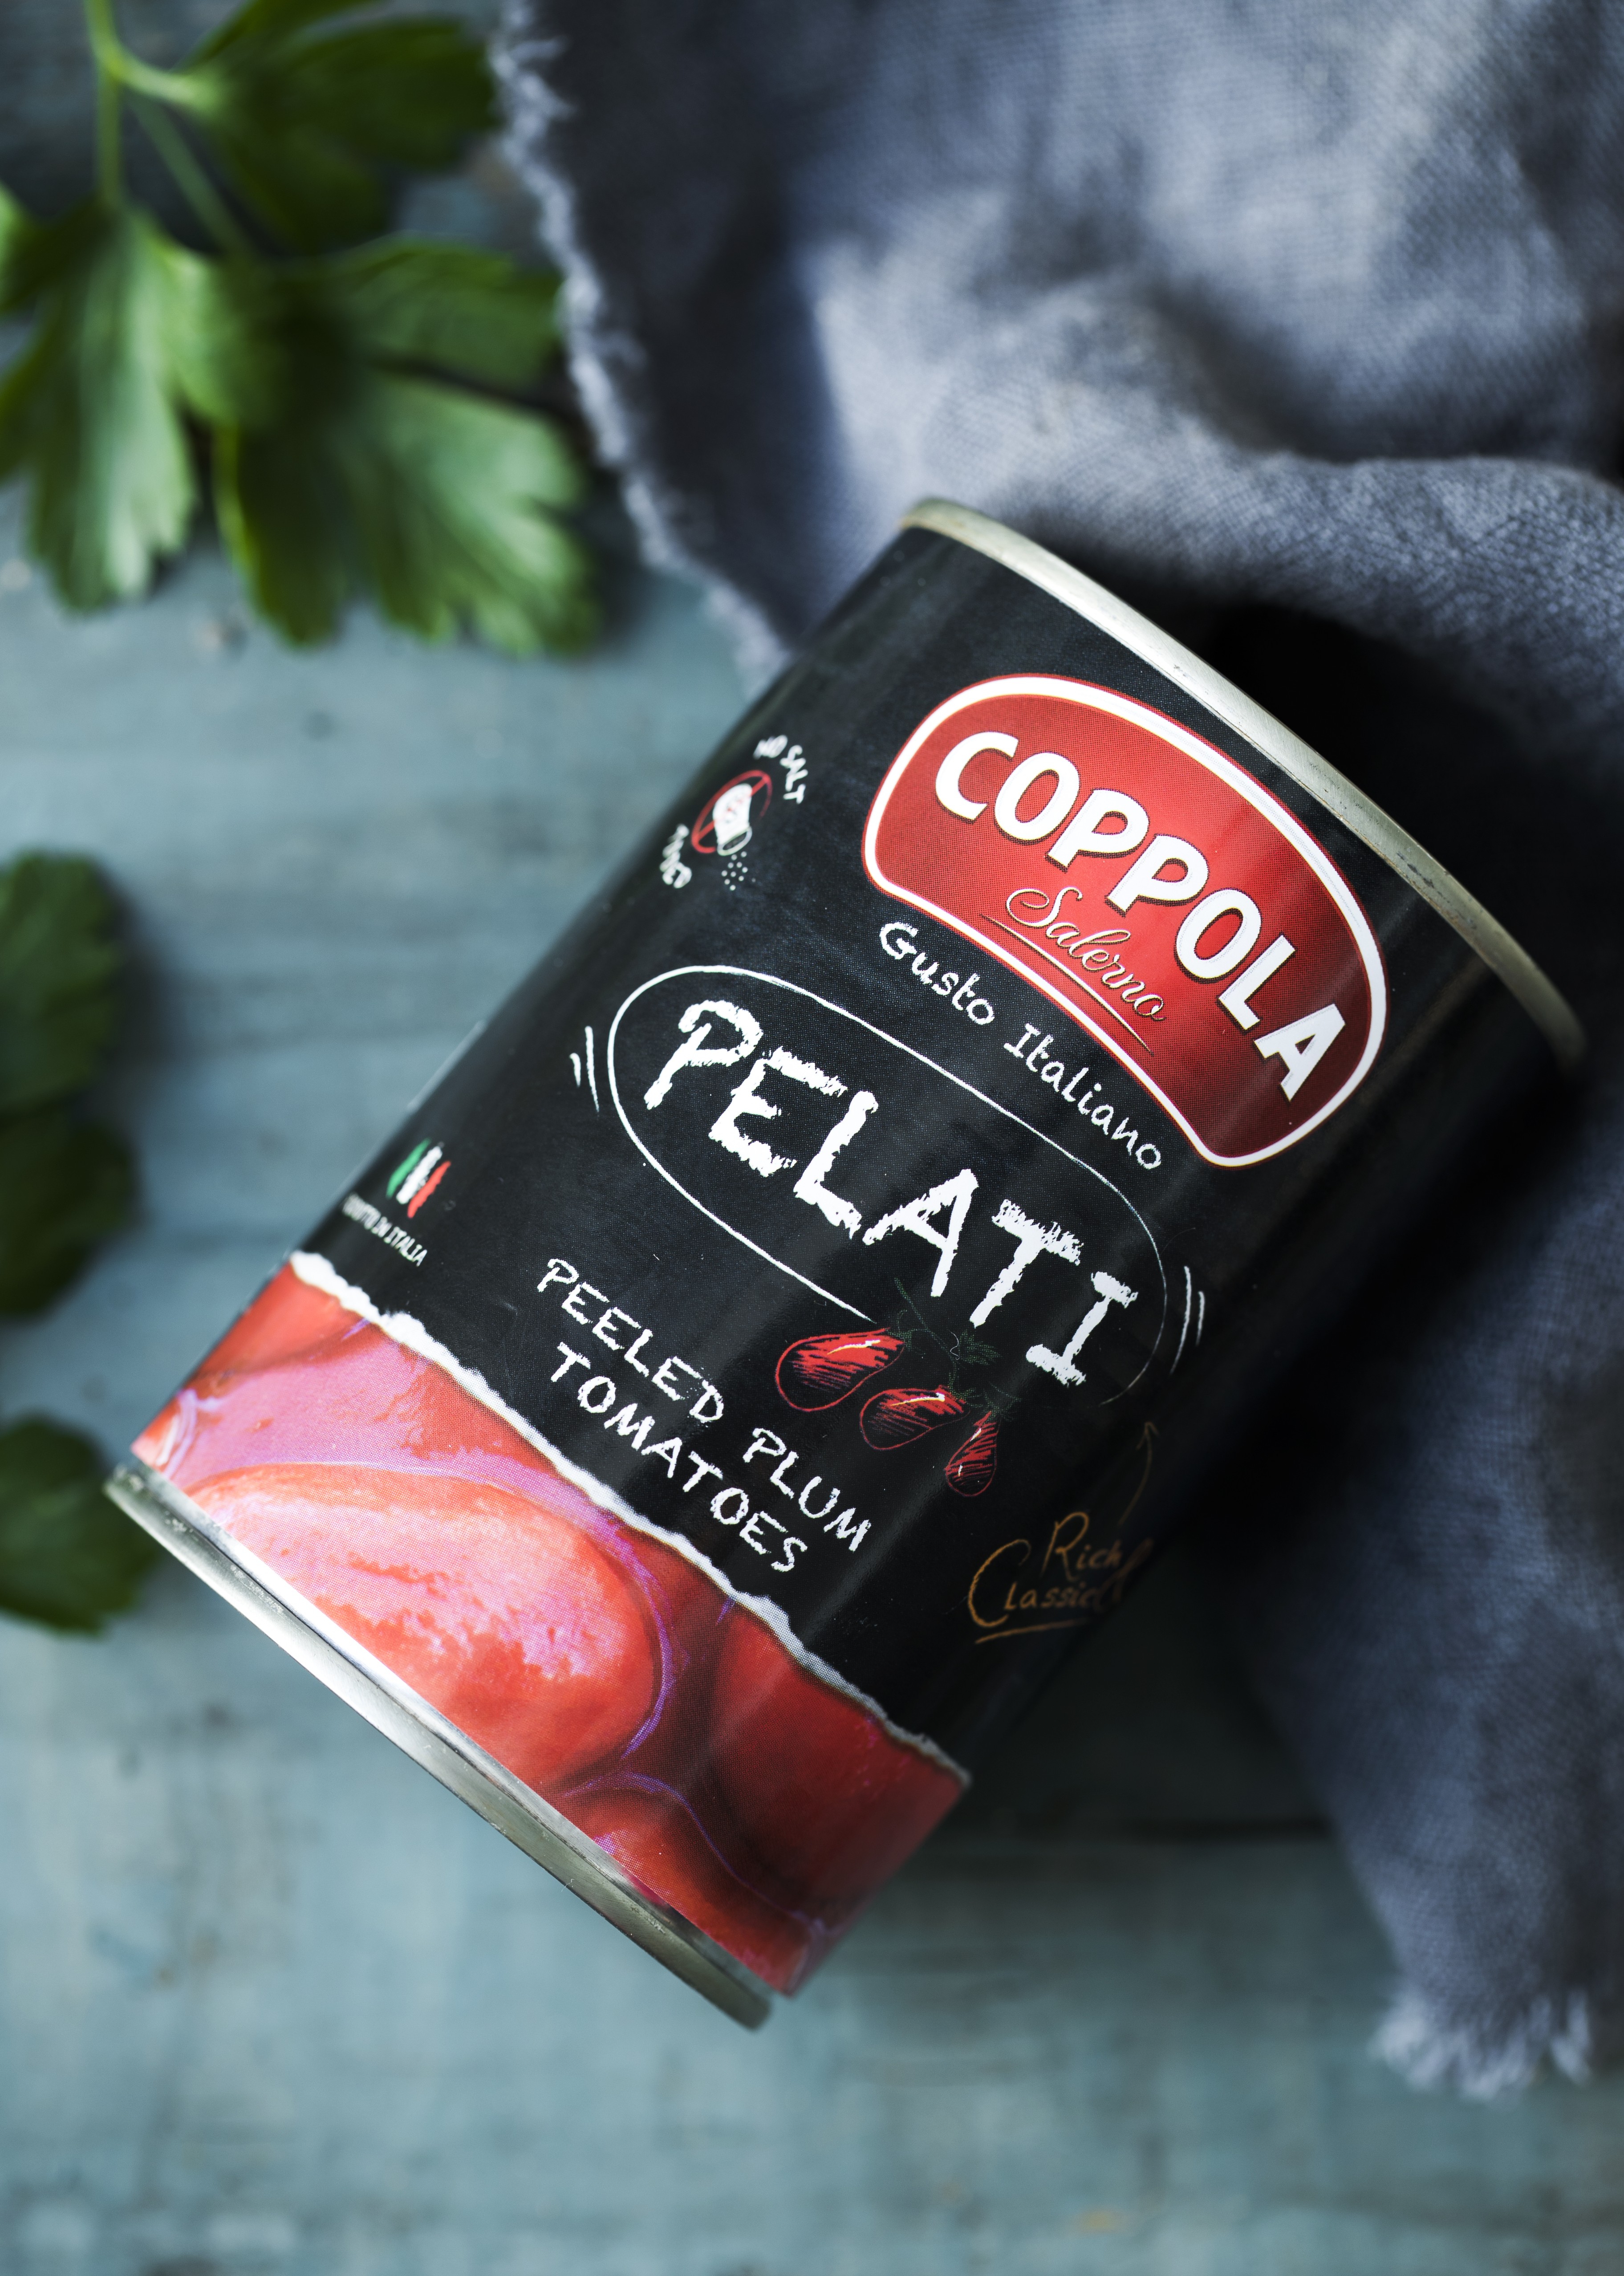 Coppola / Peeled plum tomatoes